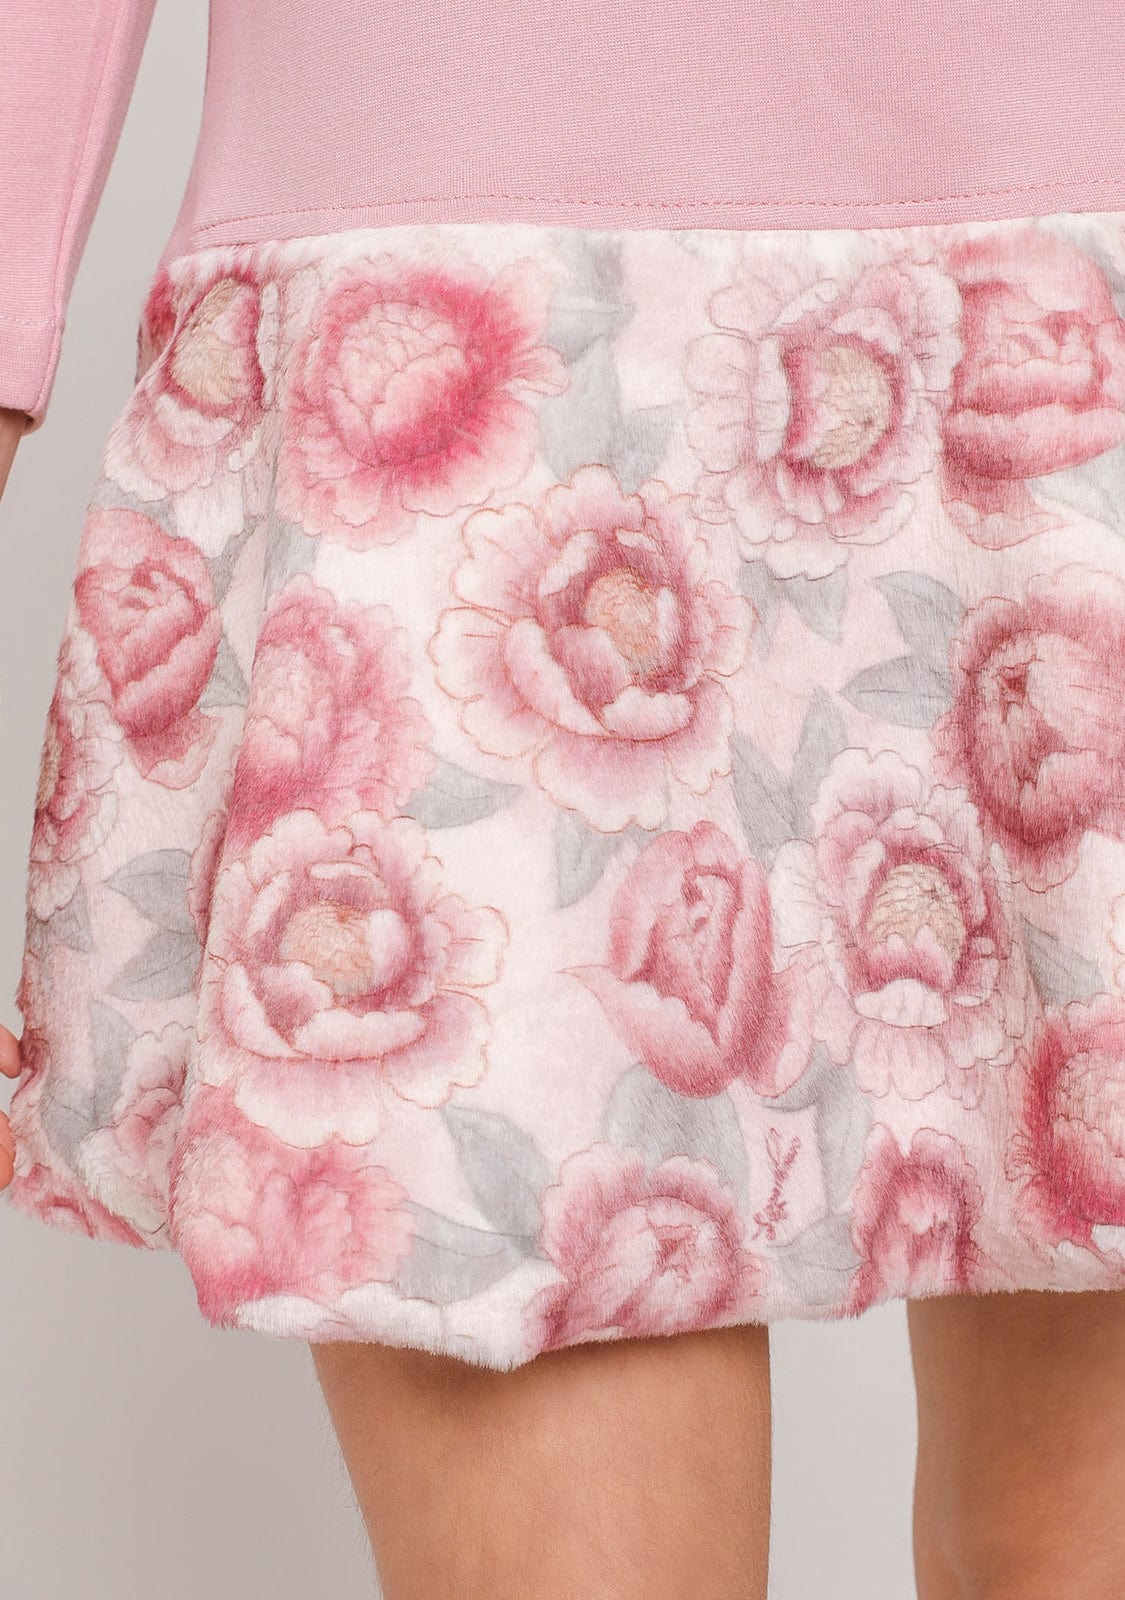 CONGUITOS TEXTIL Clothing Girl's Fur Heart Pink Dress